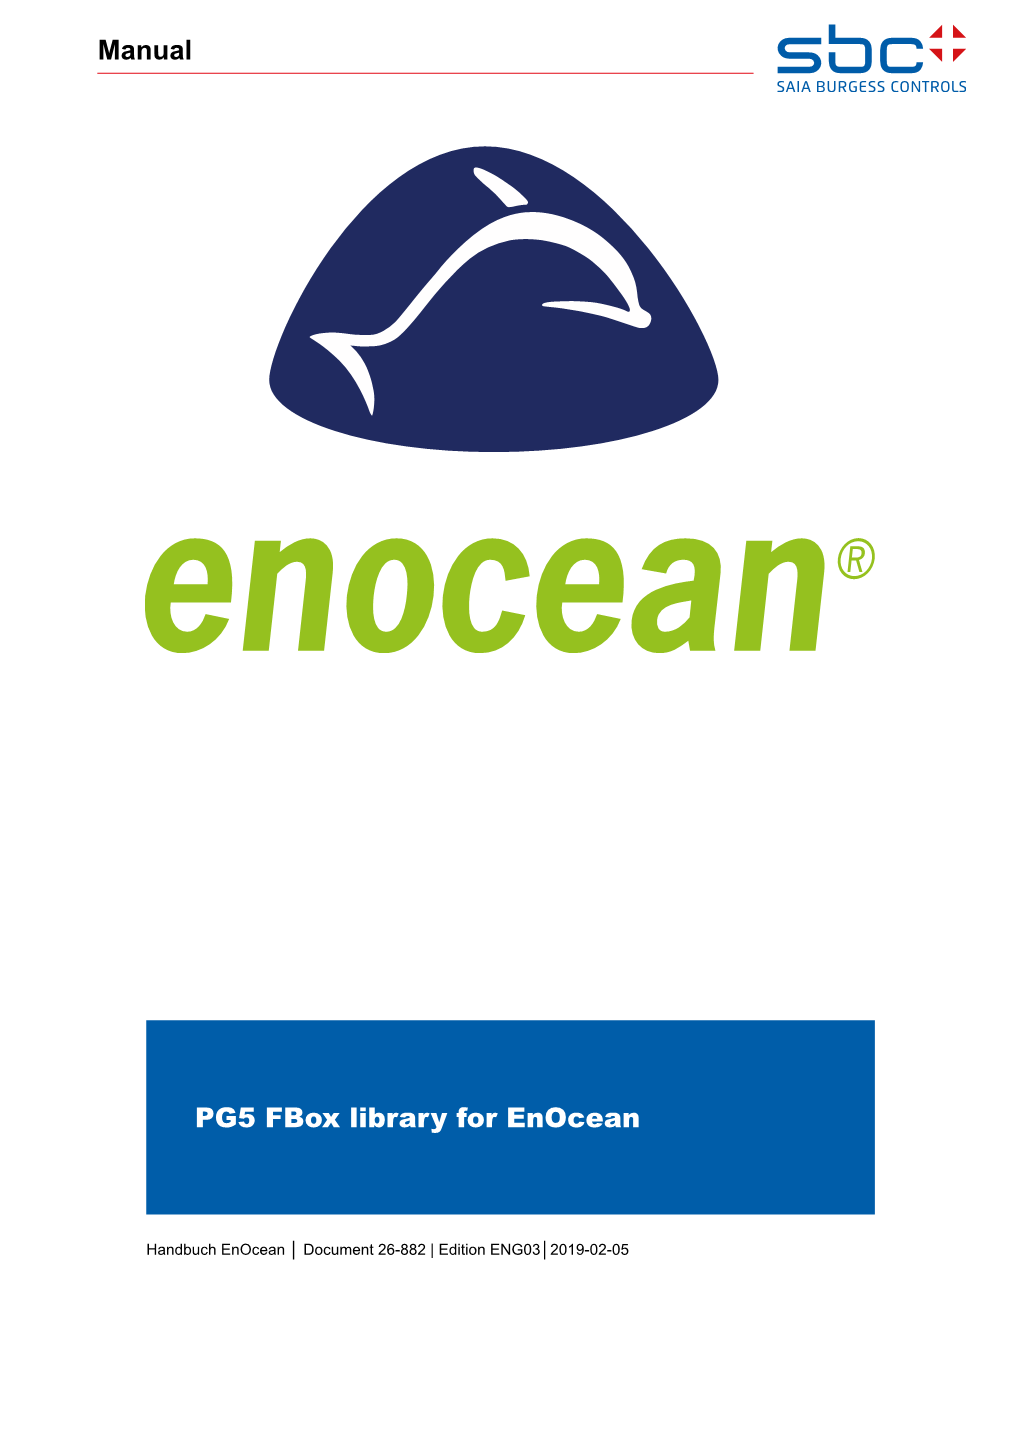 PG5 Fbox Library for Enocean Manual